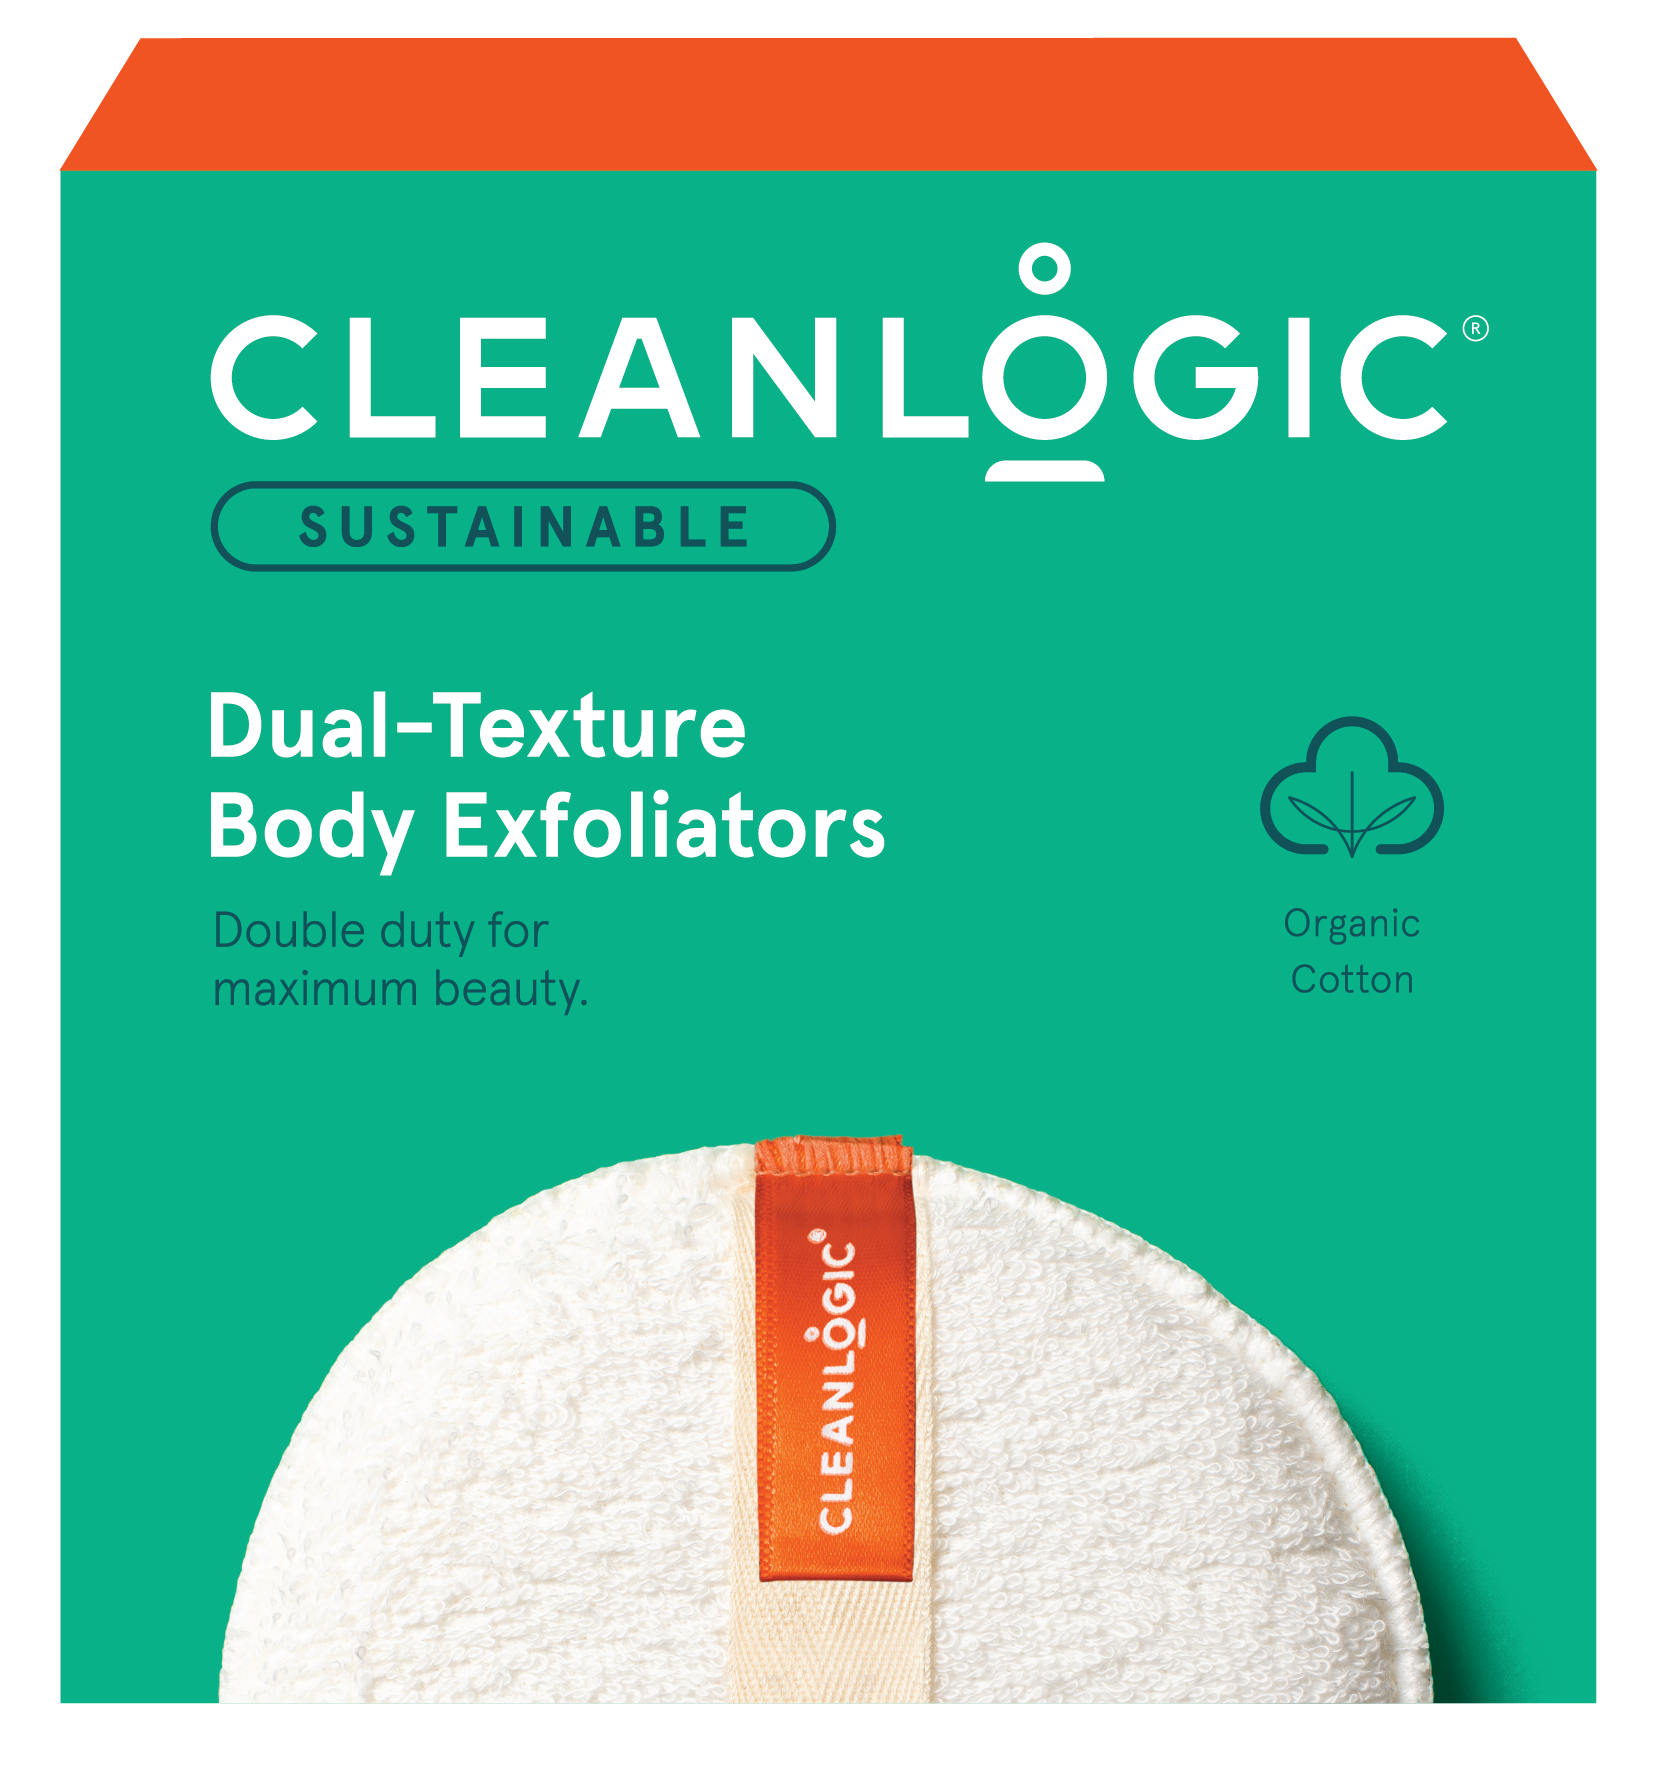 Sustainable Dual-Texture Body Exfoliators, 3 Count